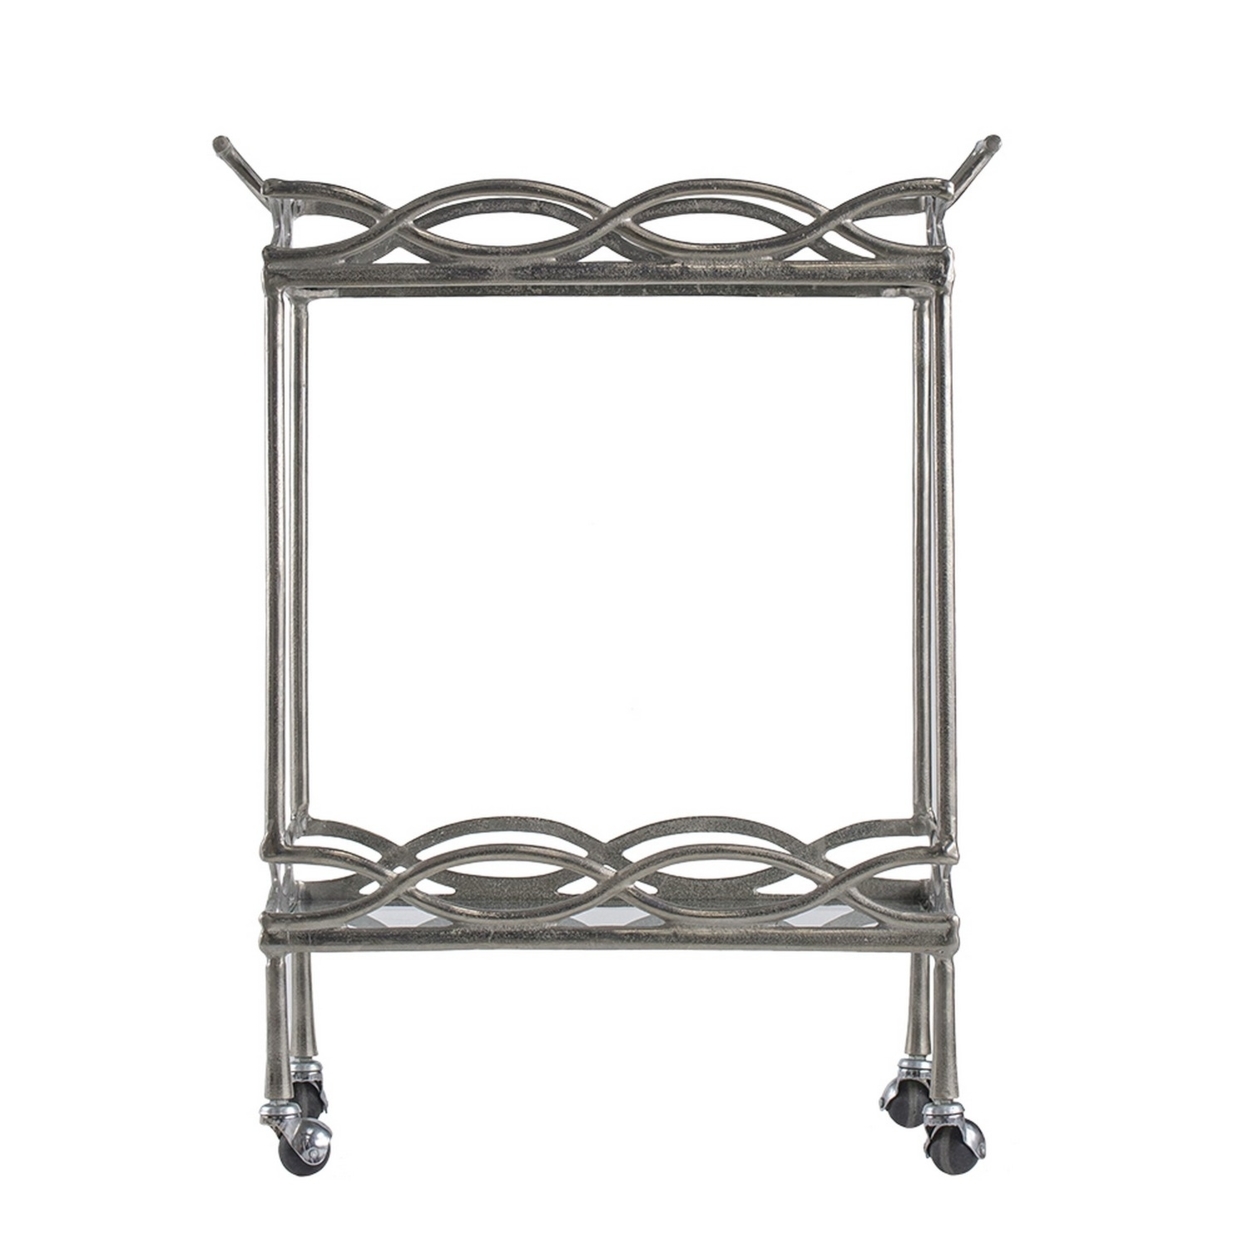 30 Inch Aluminum Bar Cart, 2 Tier Glass Shelves, Dynamic Accents, Silver- Saltoro Sherpi